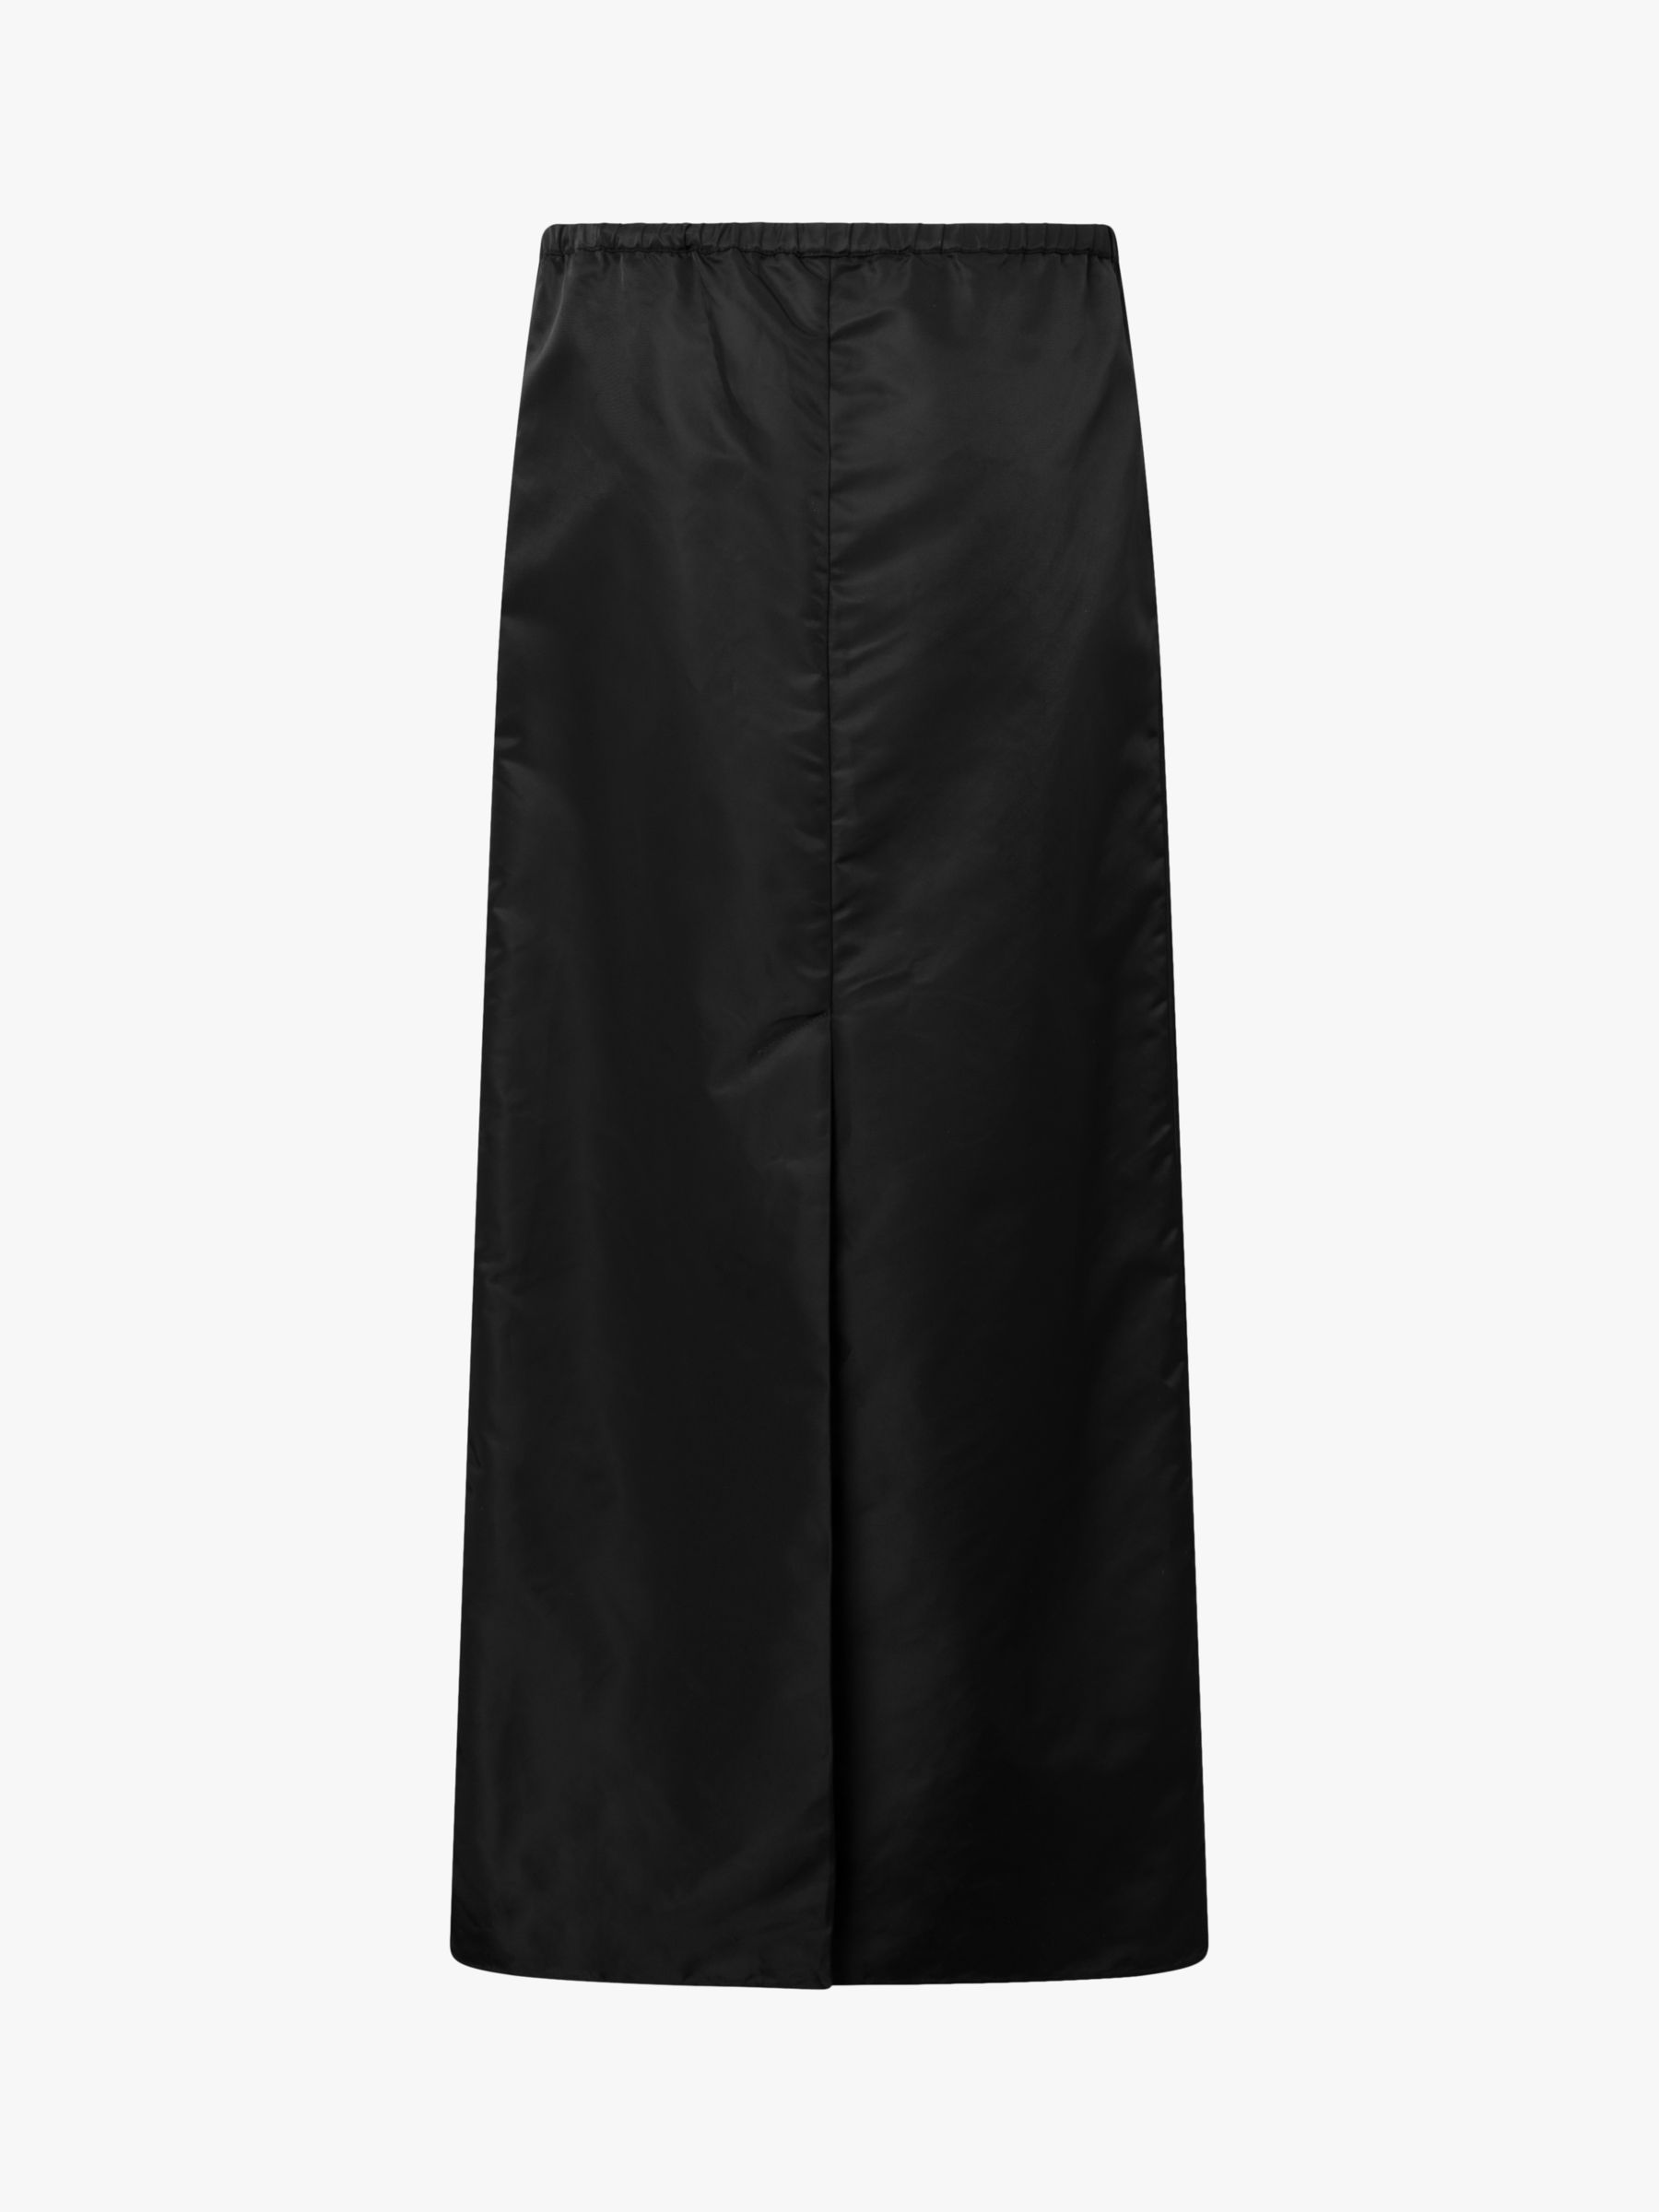 Buy Lovechild 1979 Ramona Maxi Skirt, Black Online at johnlewis.com